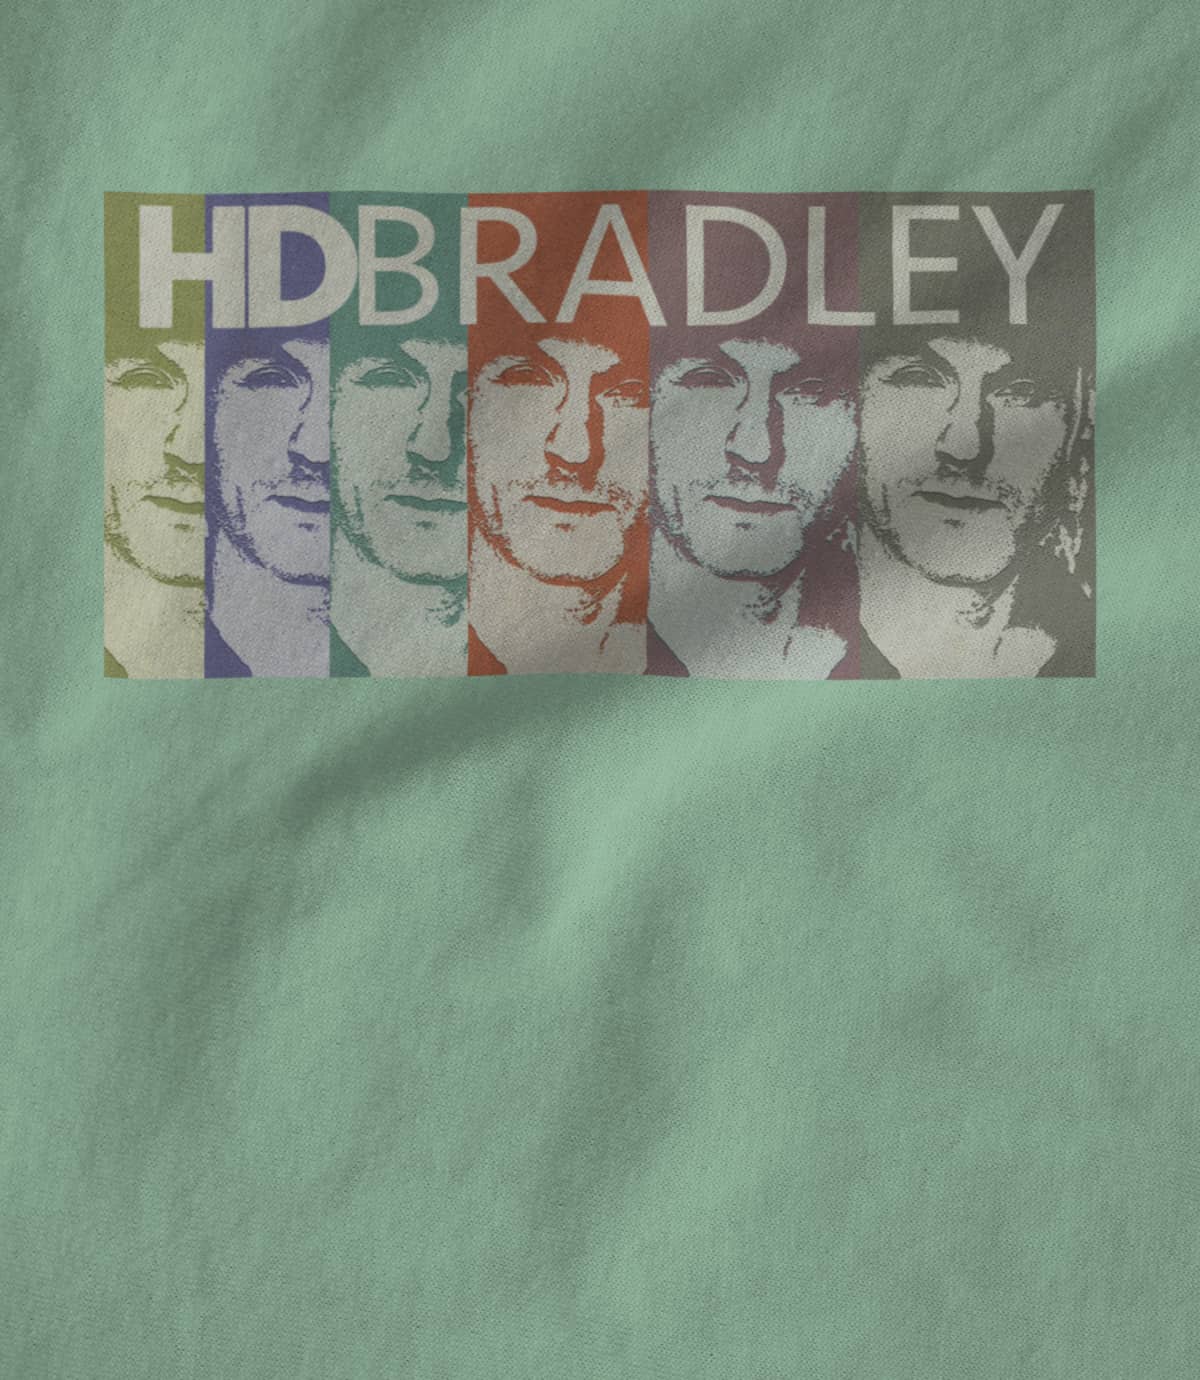 HD Bradley